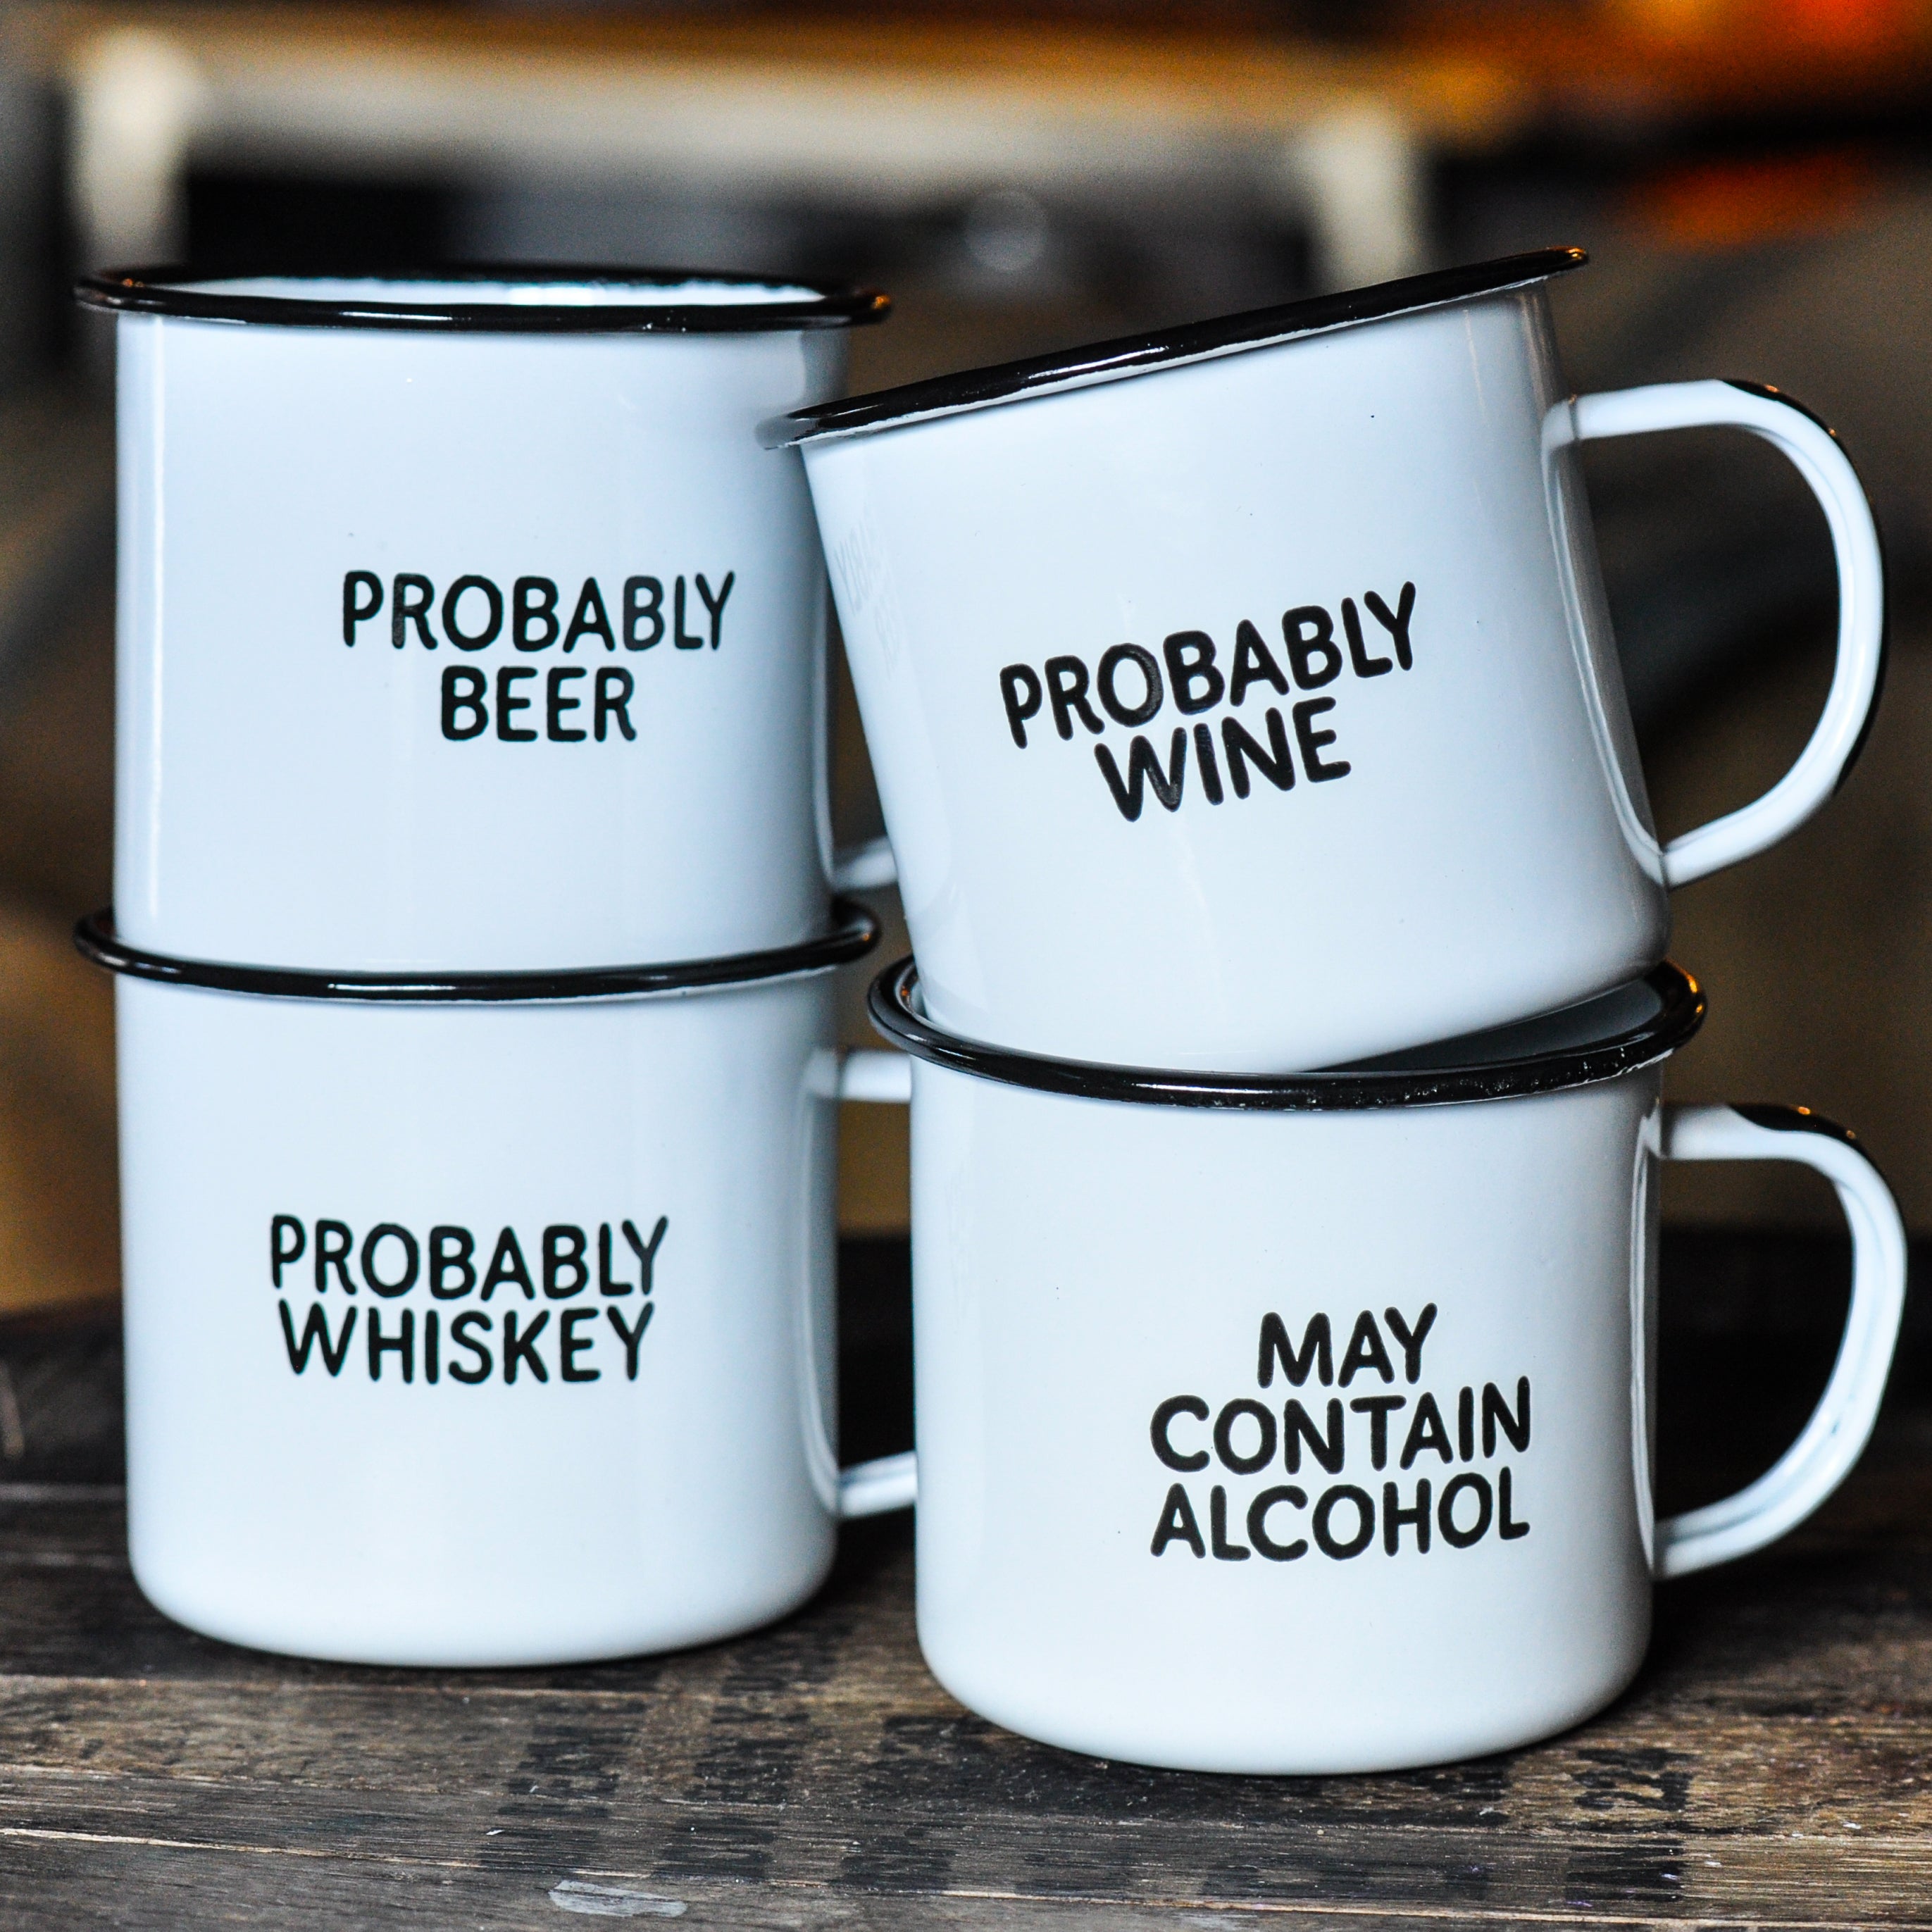  PROBABLY WHISKEY, Enamel Coffee Mug